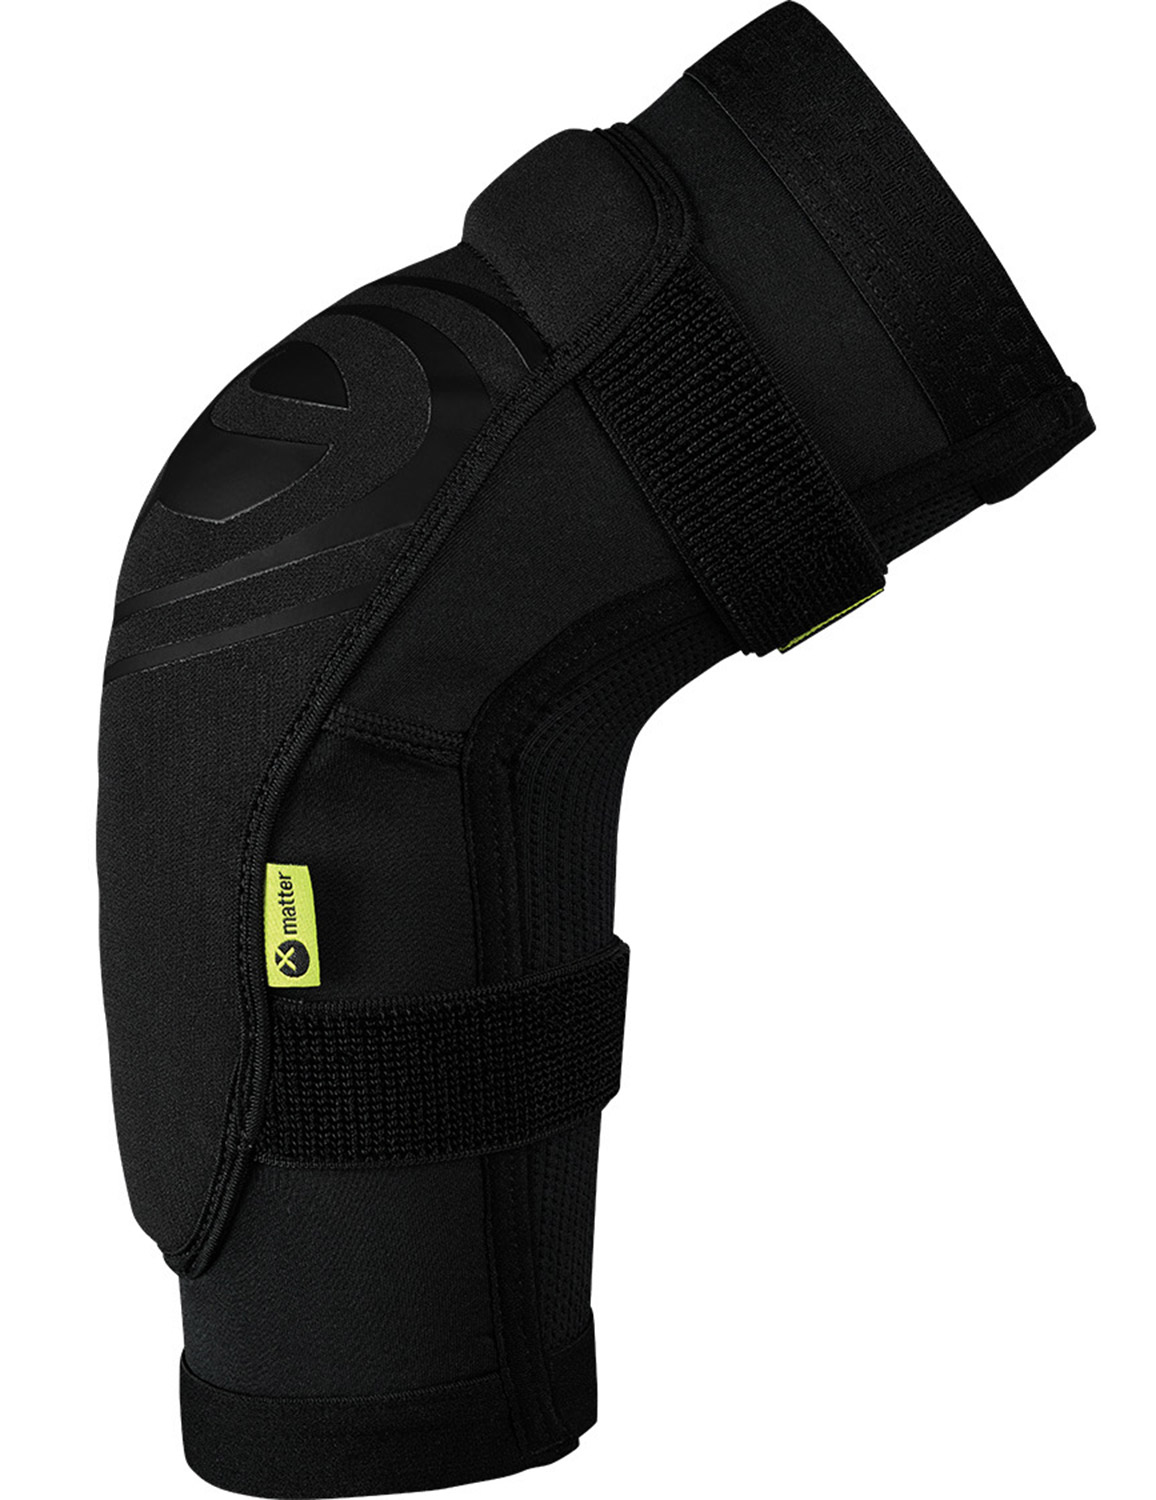 iXS Flow 2.0 Elbow Guard Protektion Black 24354